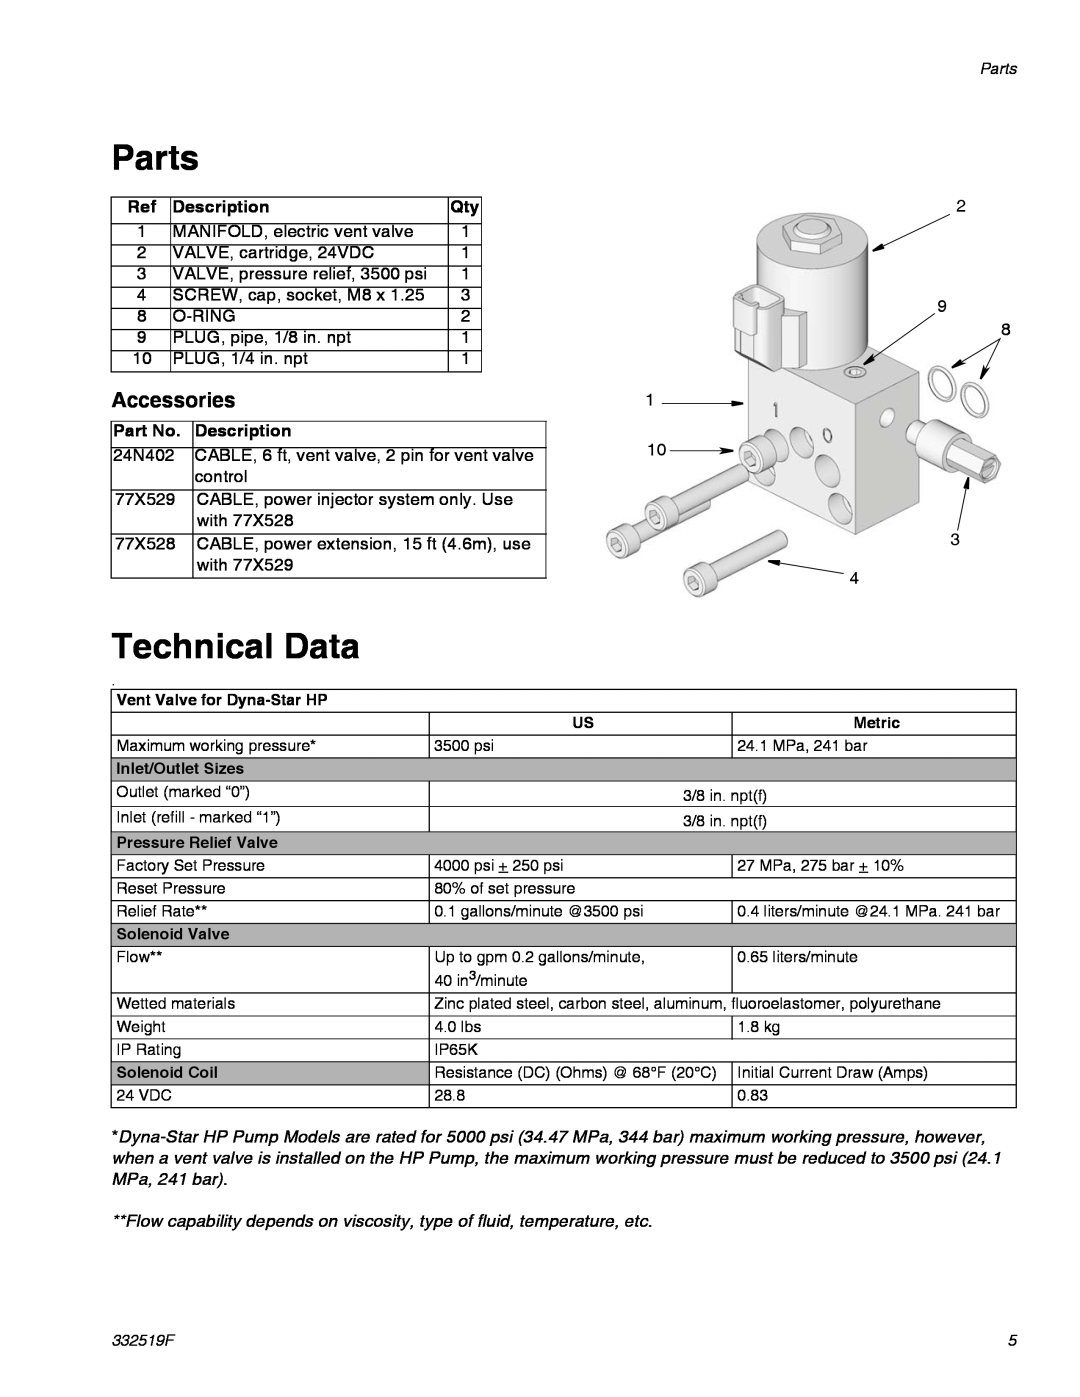 Graco 77X540 important safety instructions Parts, Technical Data, Accessories, Part No. Description 